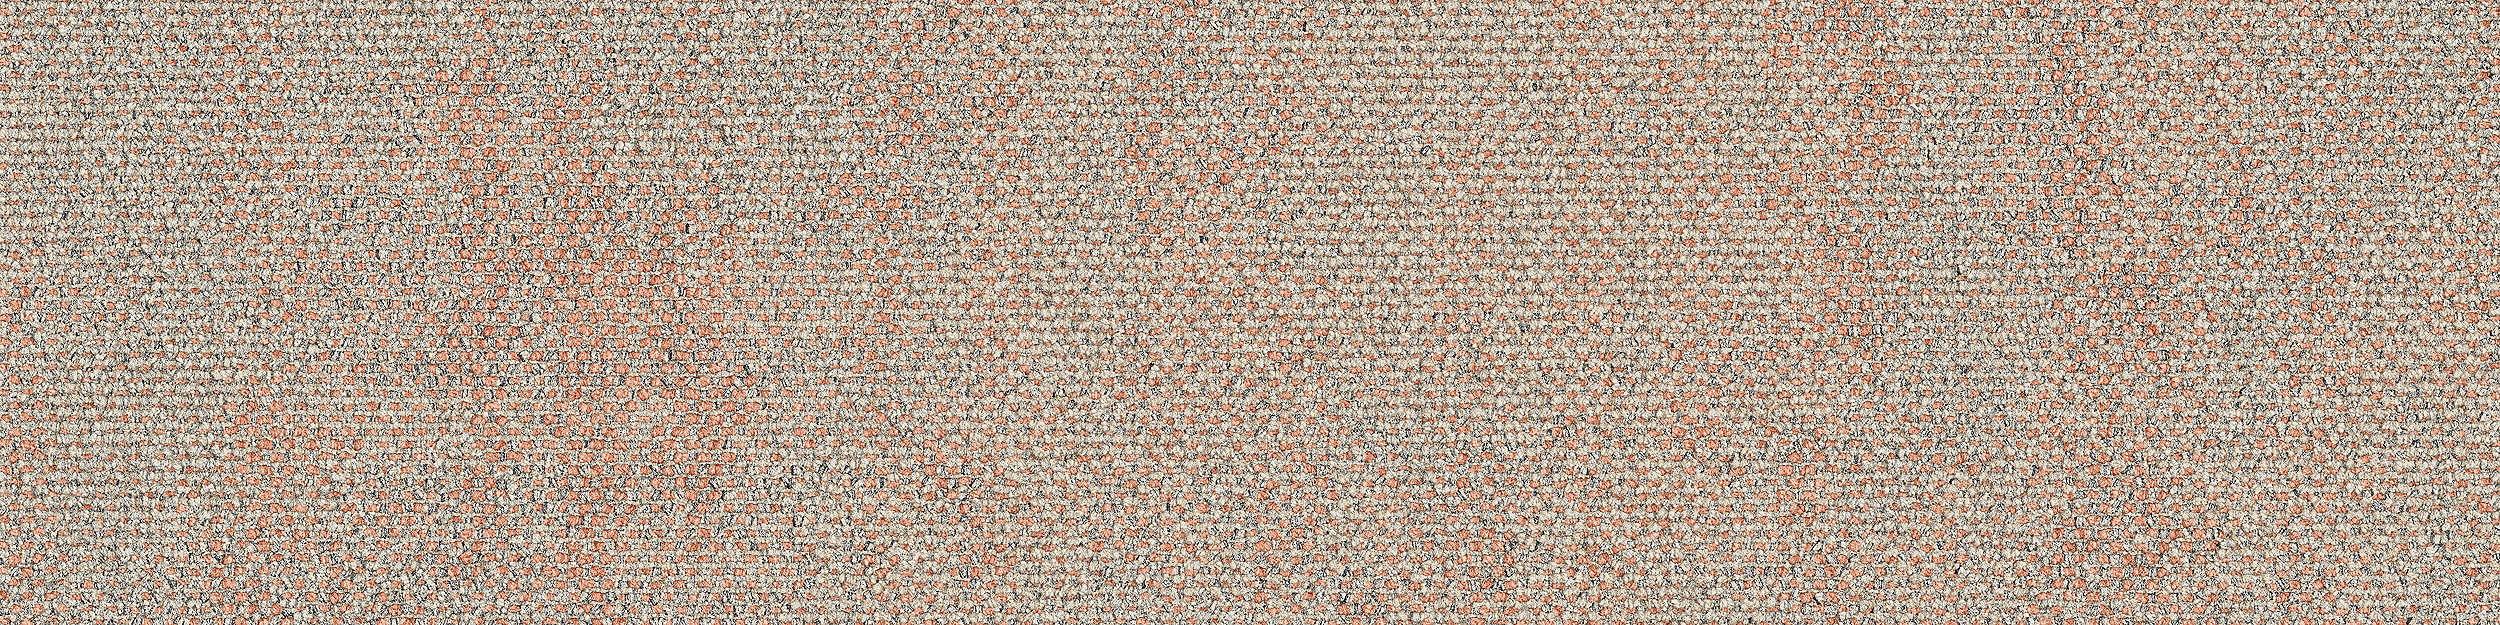 Dry Bark carpet tile in Desert Sands image number 4